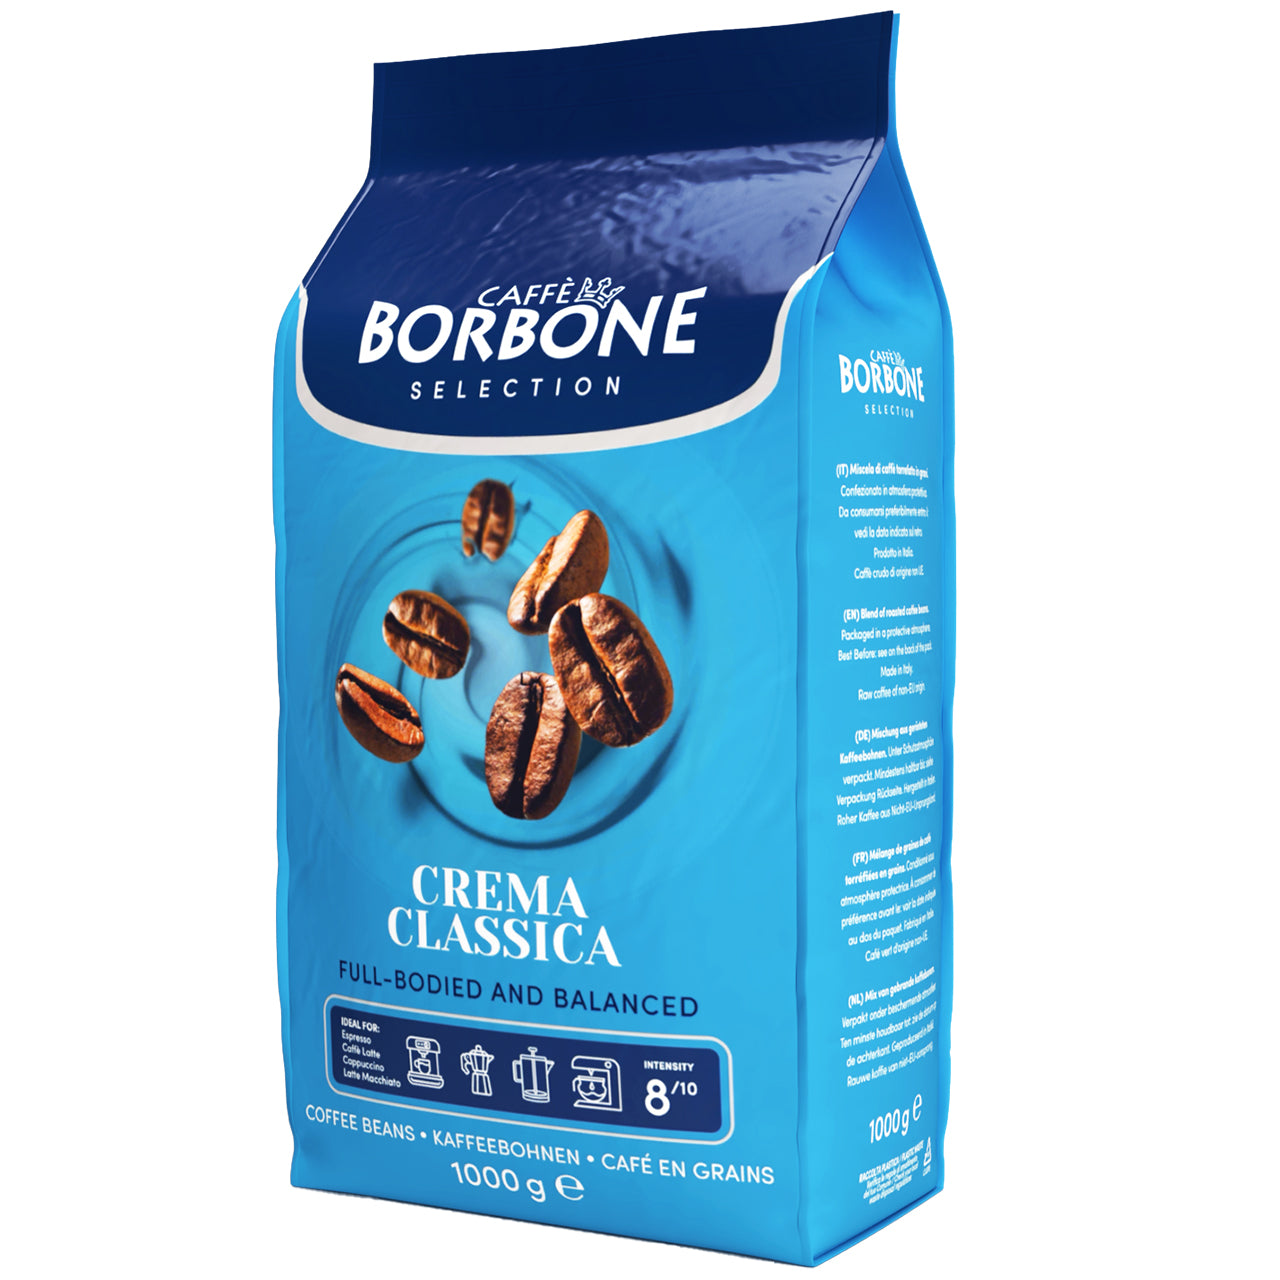 CAFFE BORBONE CREMA CLASSICA - 1KG - WHOLE COFFEE BEANS